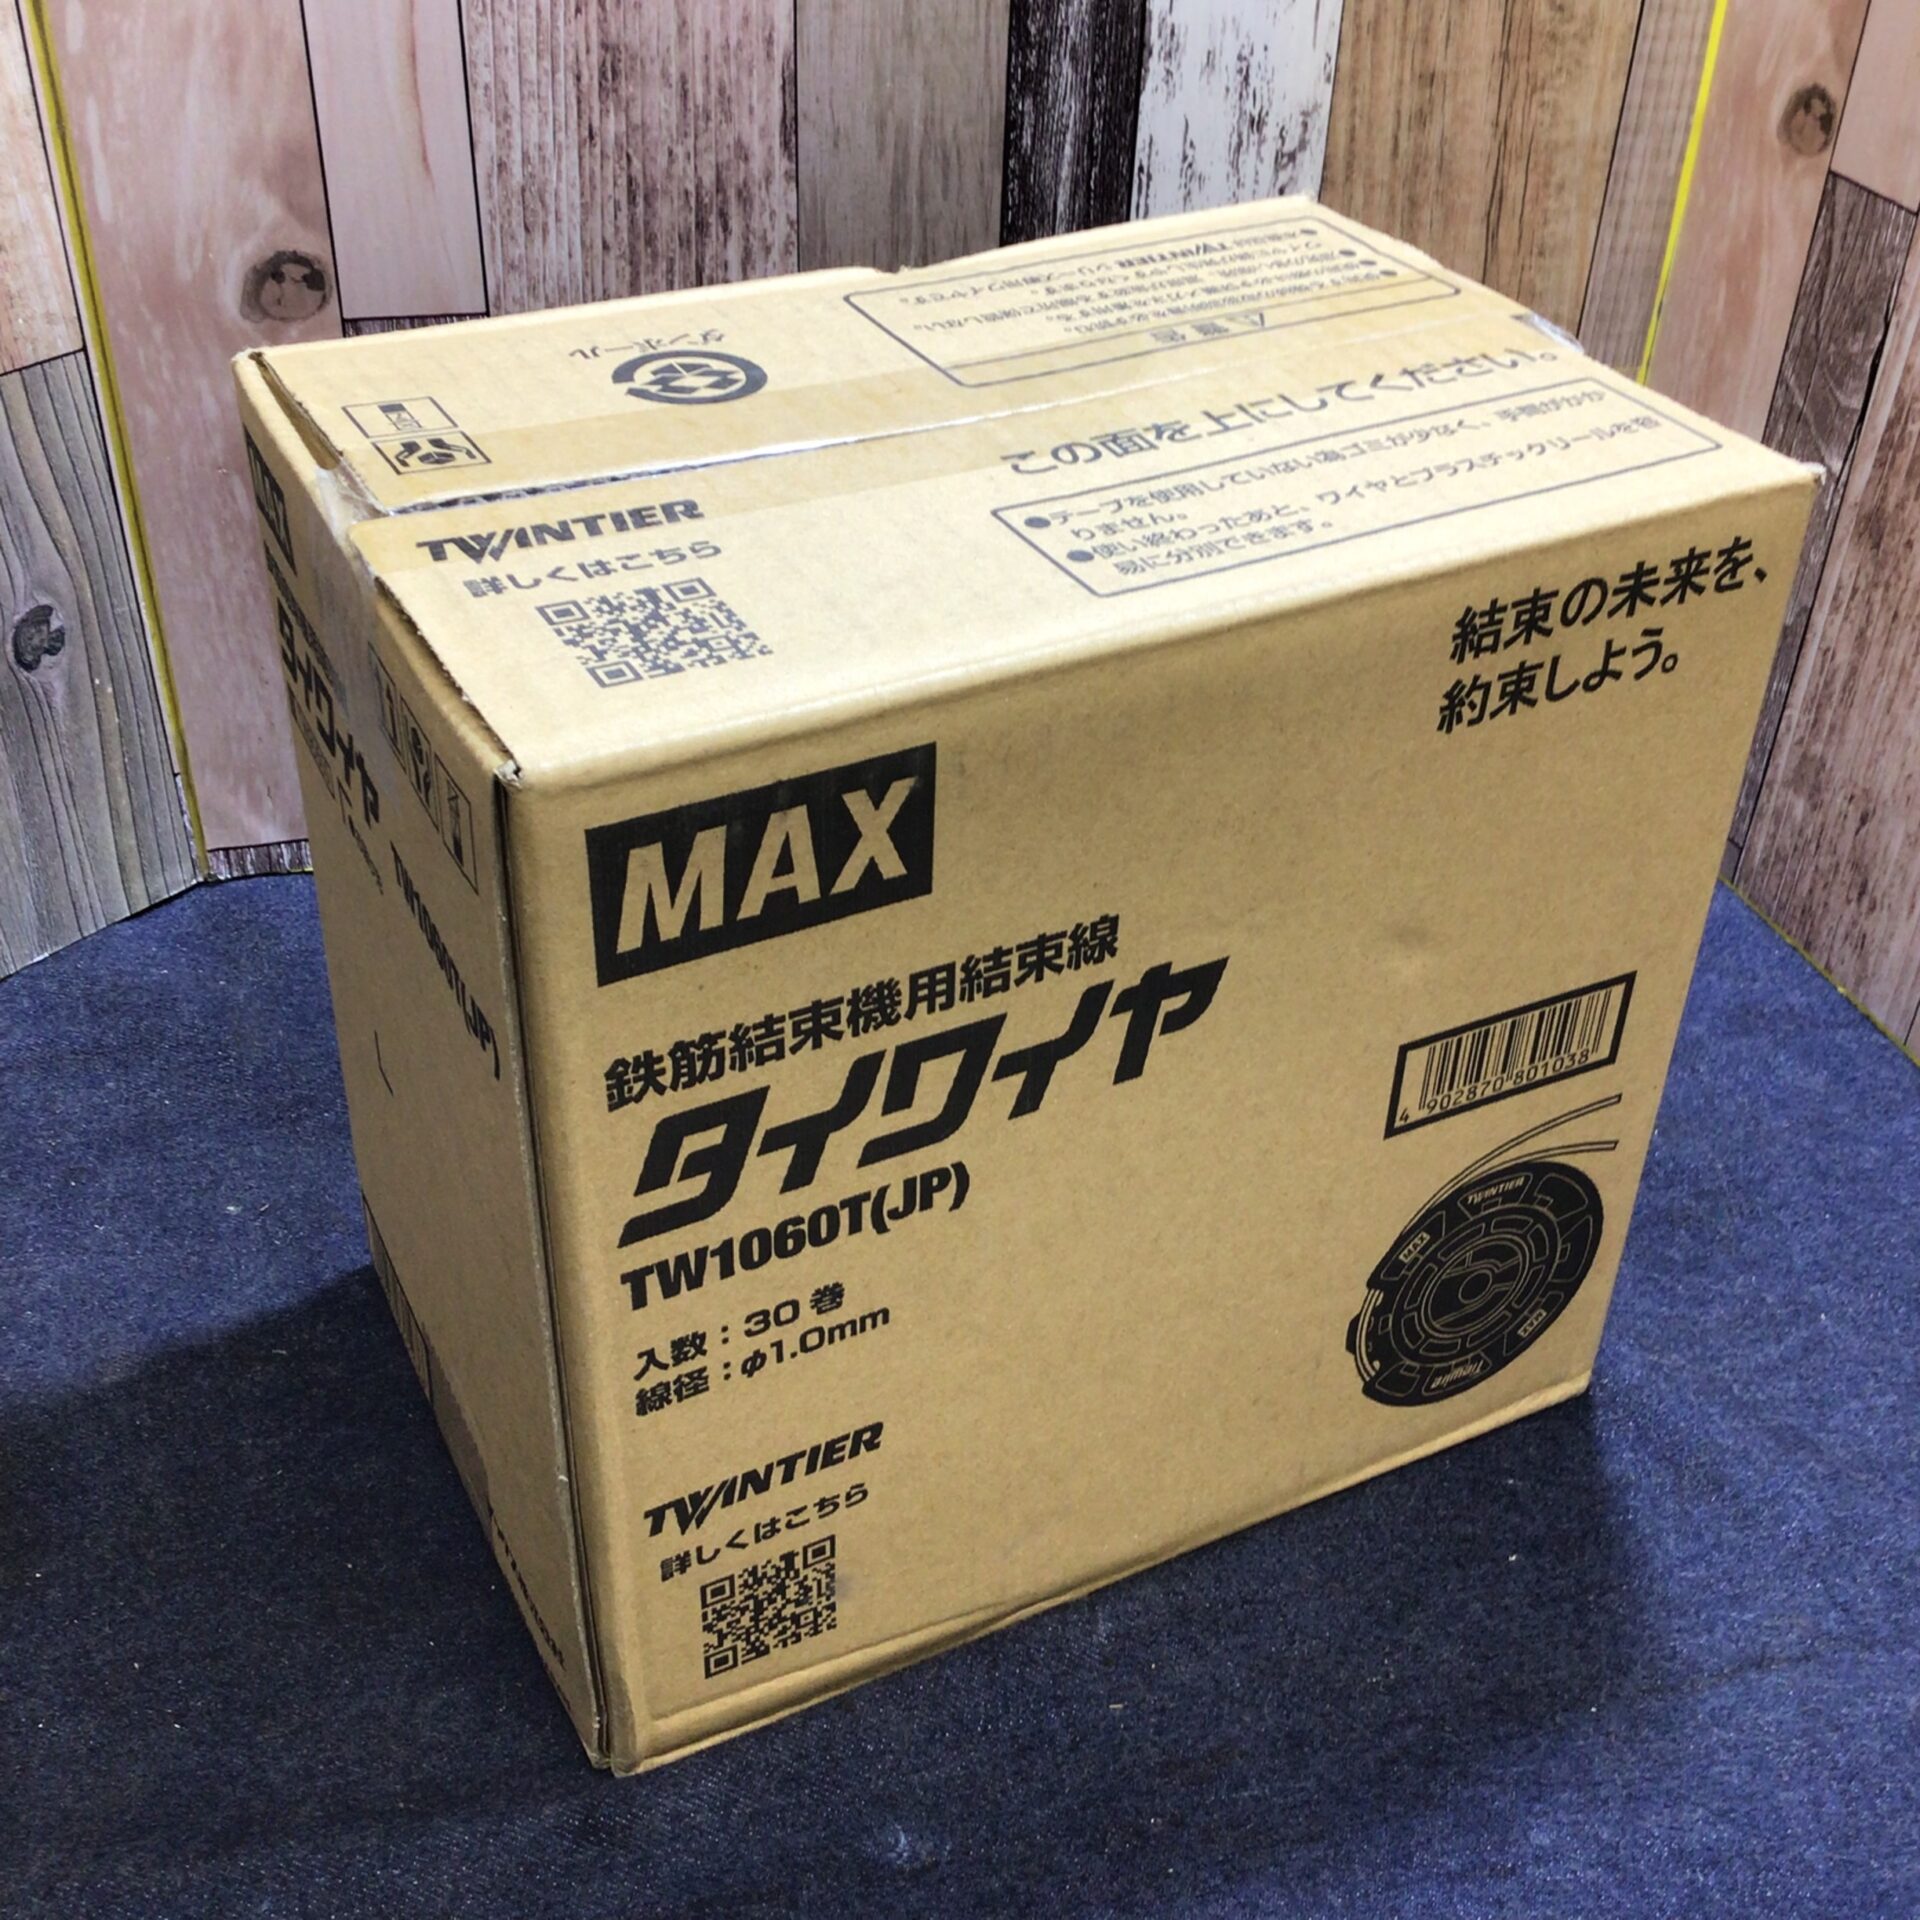 MAX ツインタイア用タイワイヤ TW1060T(JP)】を八潮市のお客様から買取